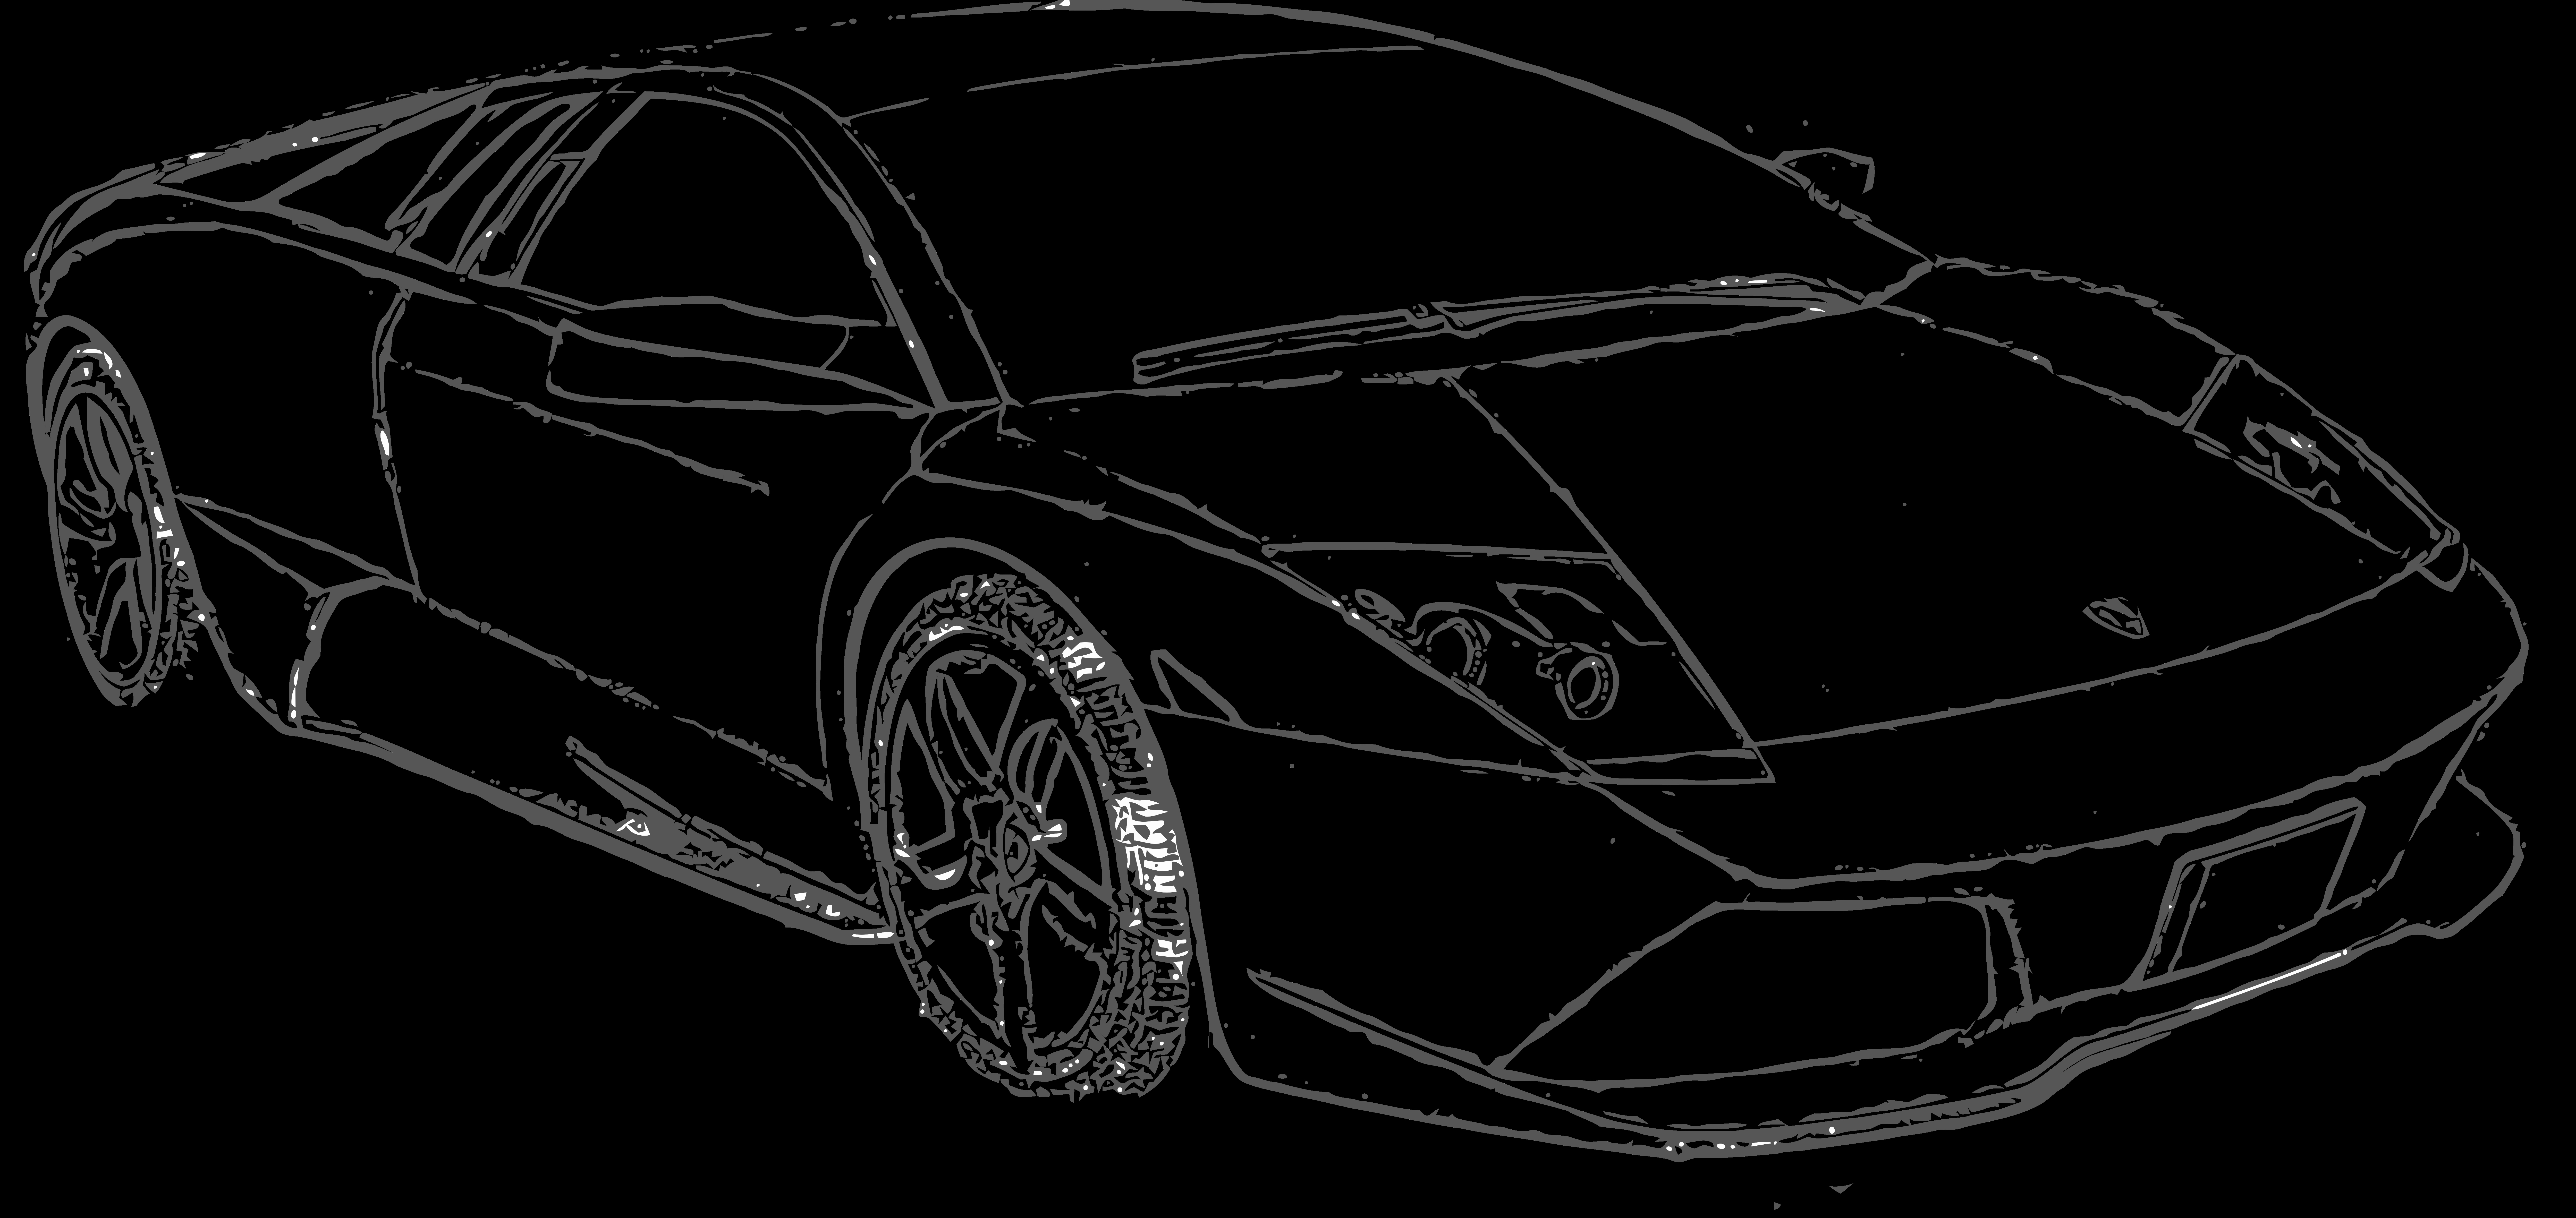 Pinewood Derby Lamborghini Template Elegant Free to Use Lamborghini Murcielago Lineart by E A 2 On